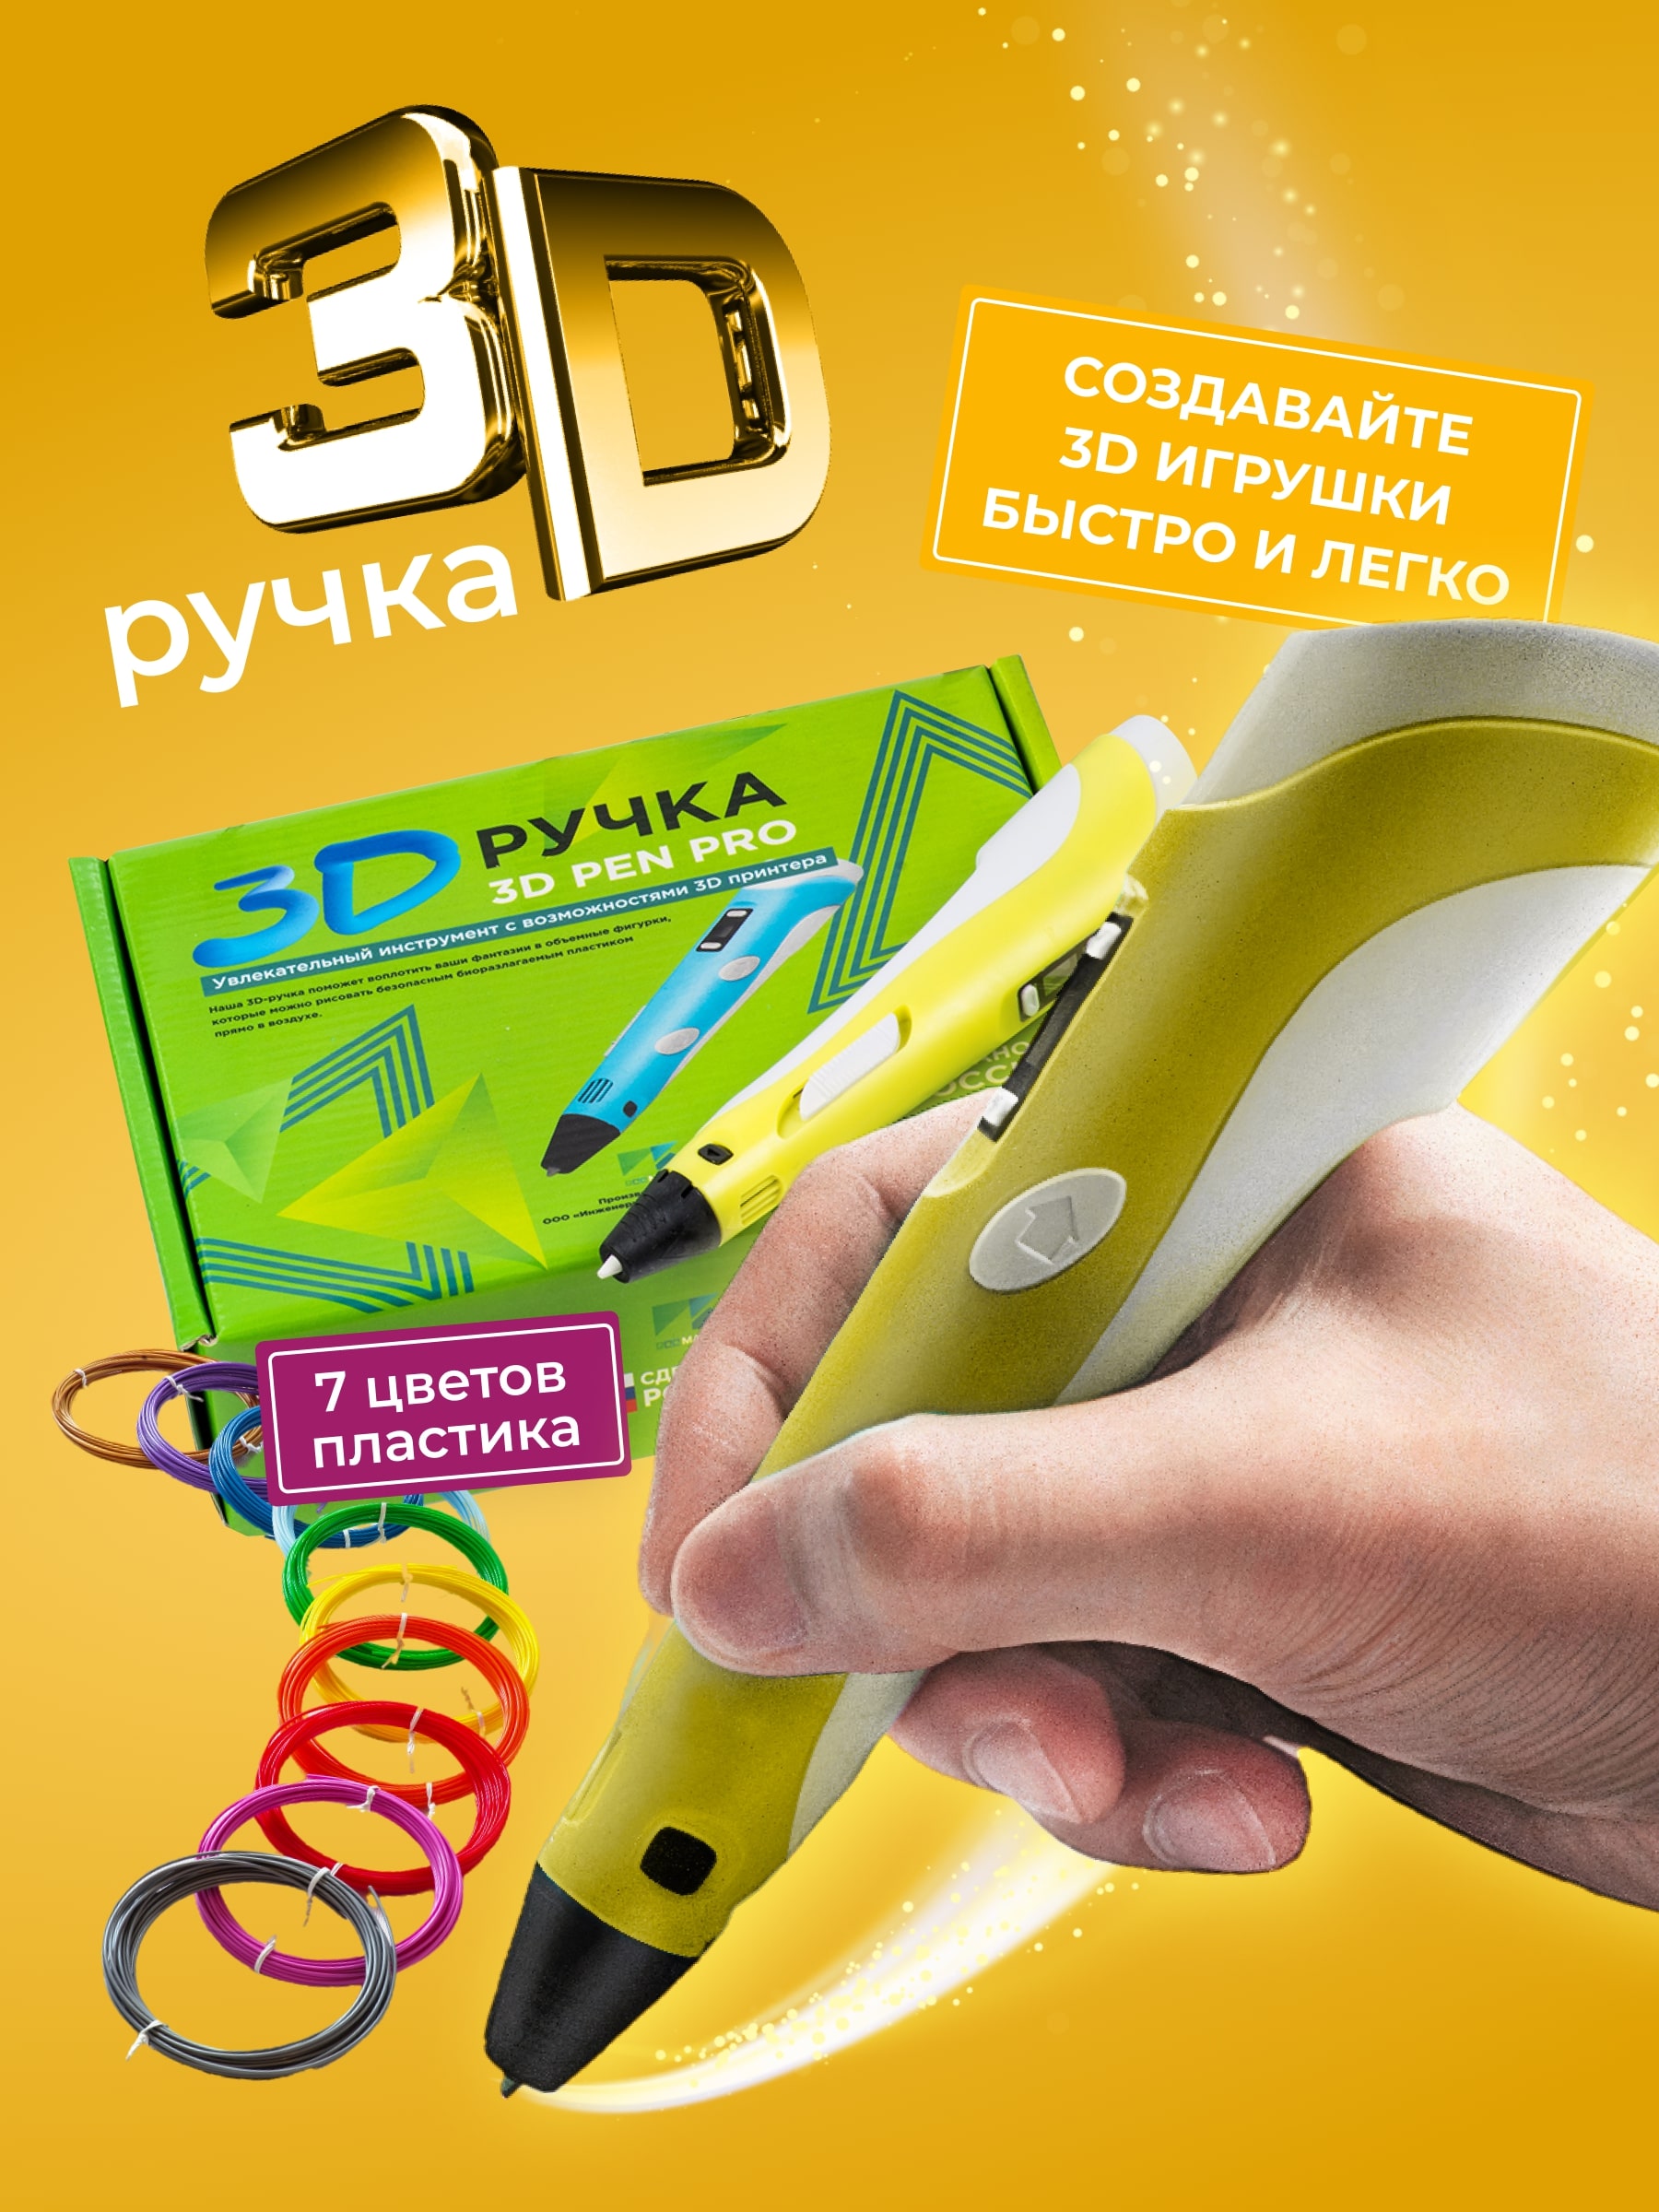 3D ручка 3D Pen PRO желтая с набором пластика (7 цветов по 10м), 10 трафаретами